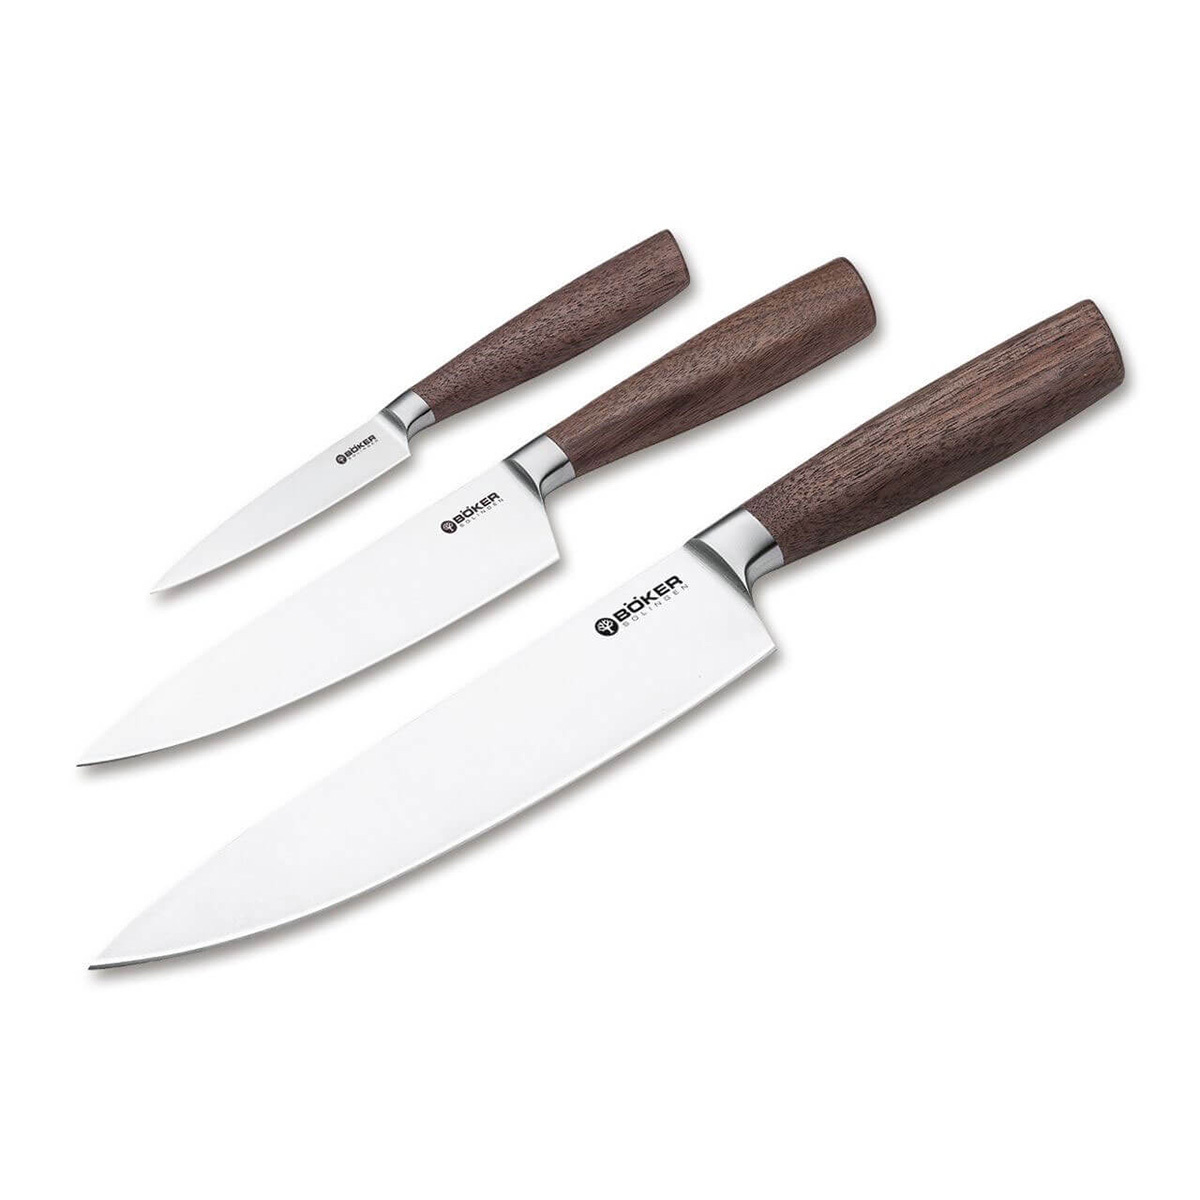 Набор кухонных ножей Boker Core Professional Set, сталь X50CrMoV15, рукоять орех